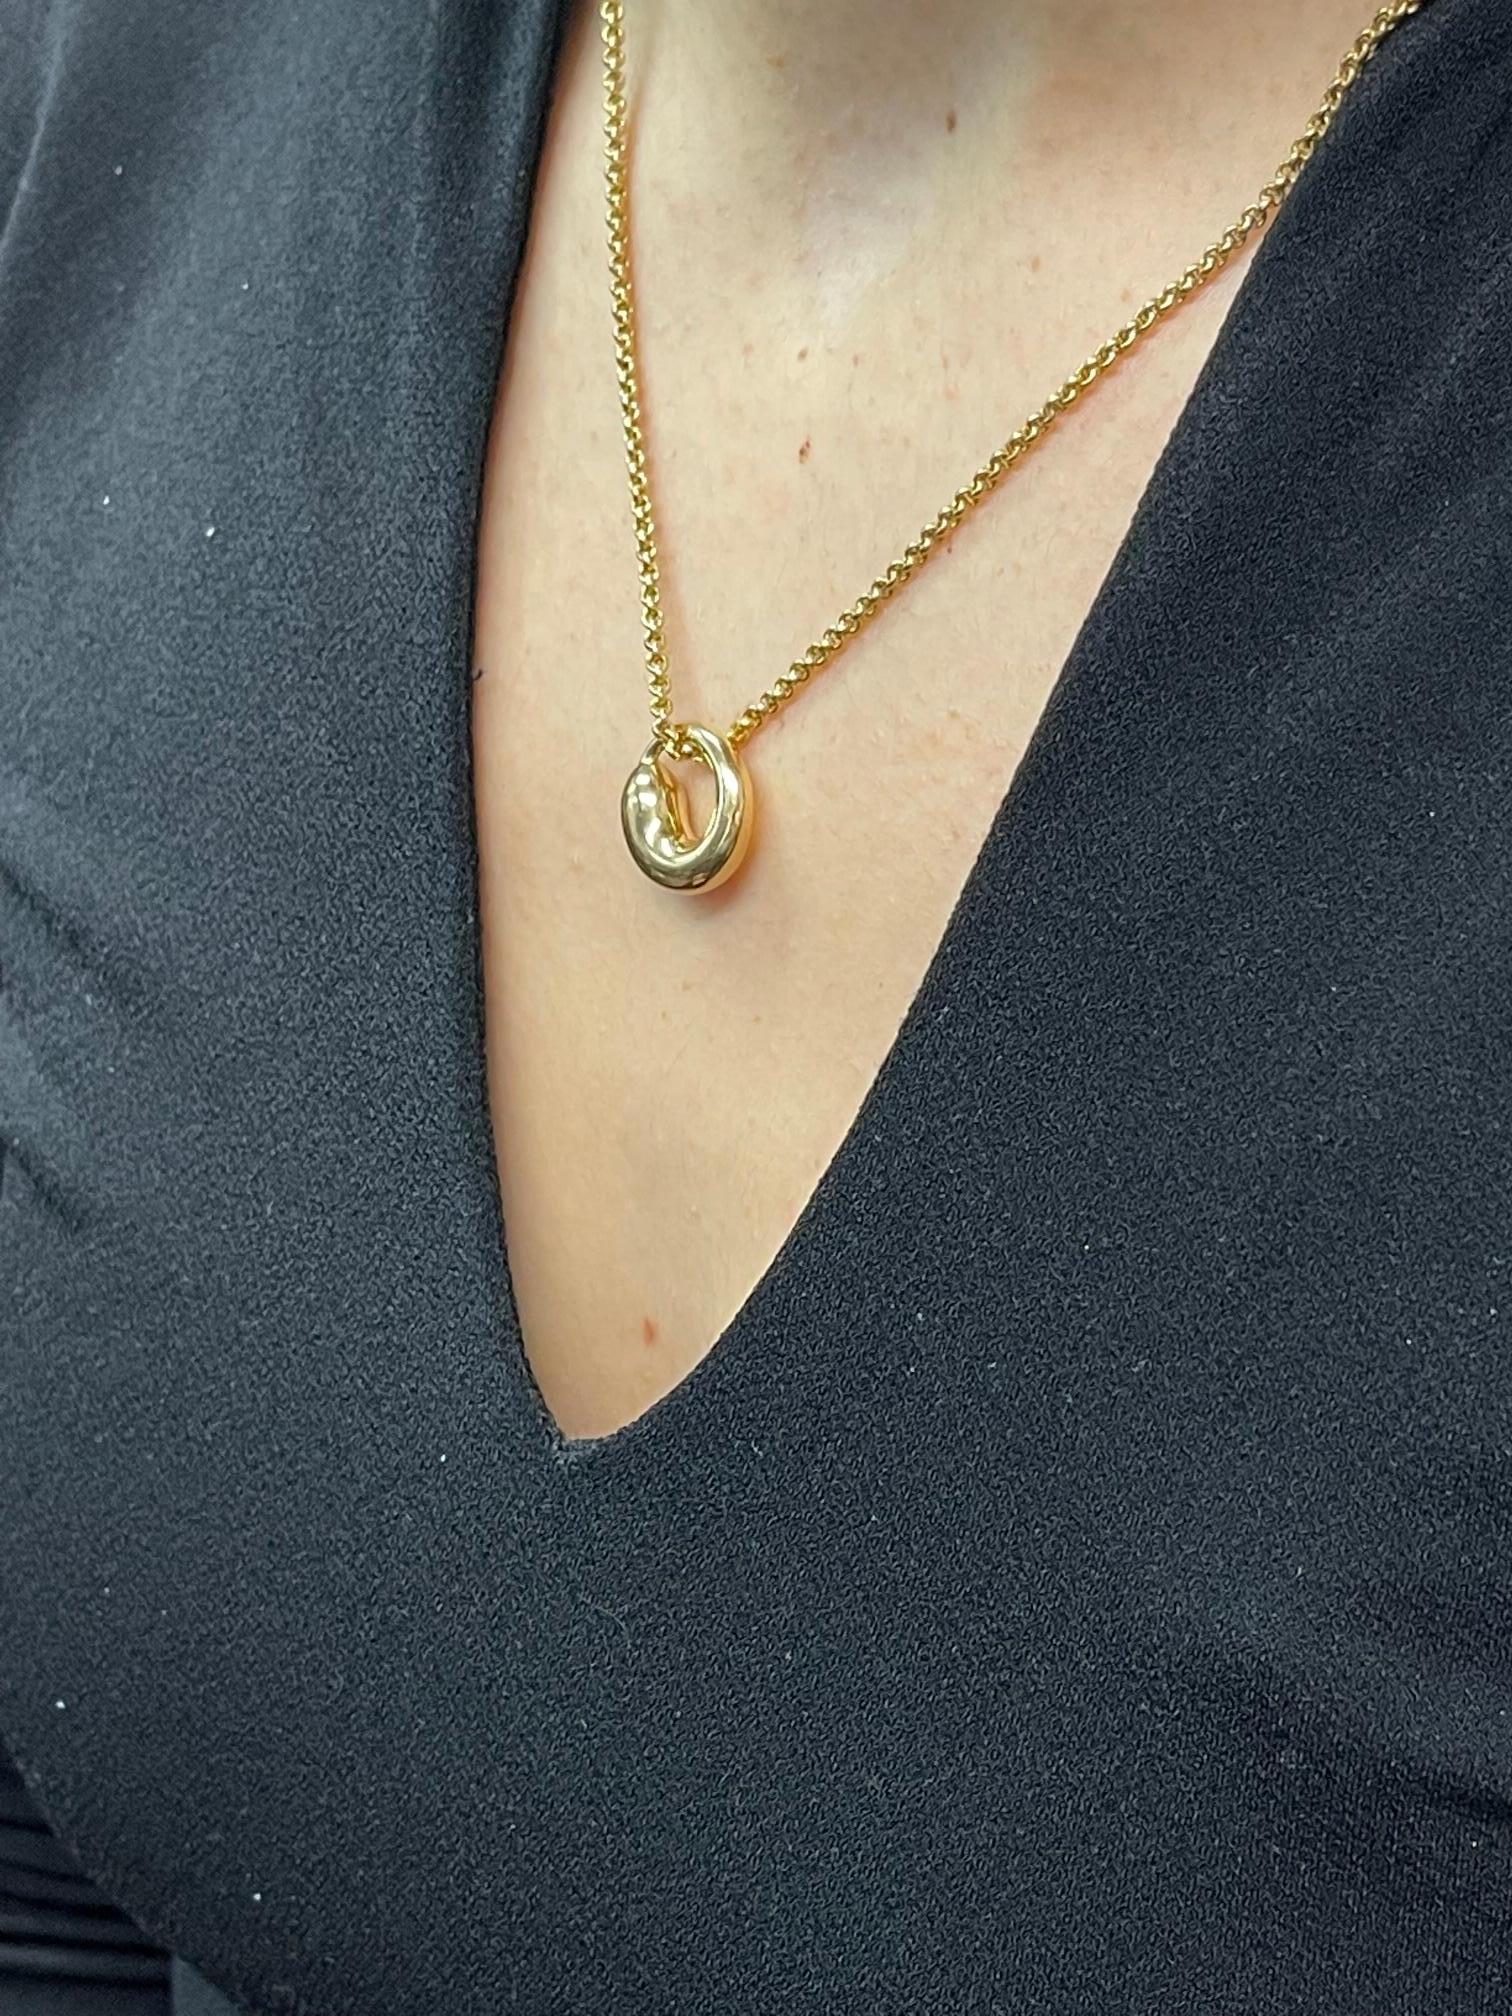 Tiffany & Co. Peretti Eternal Circle Gold Pendant Necklace Estate Fine Jewelry 1